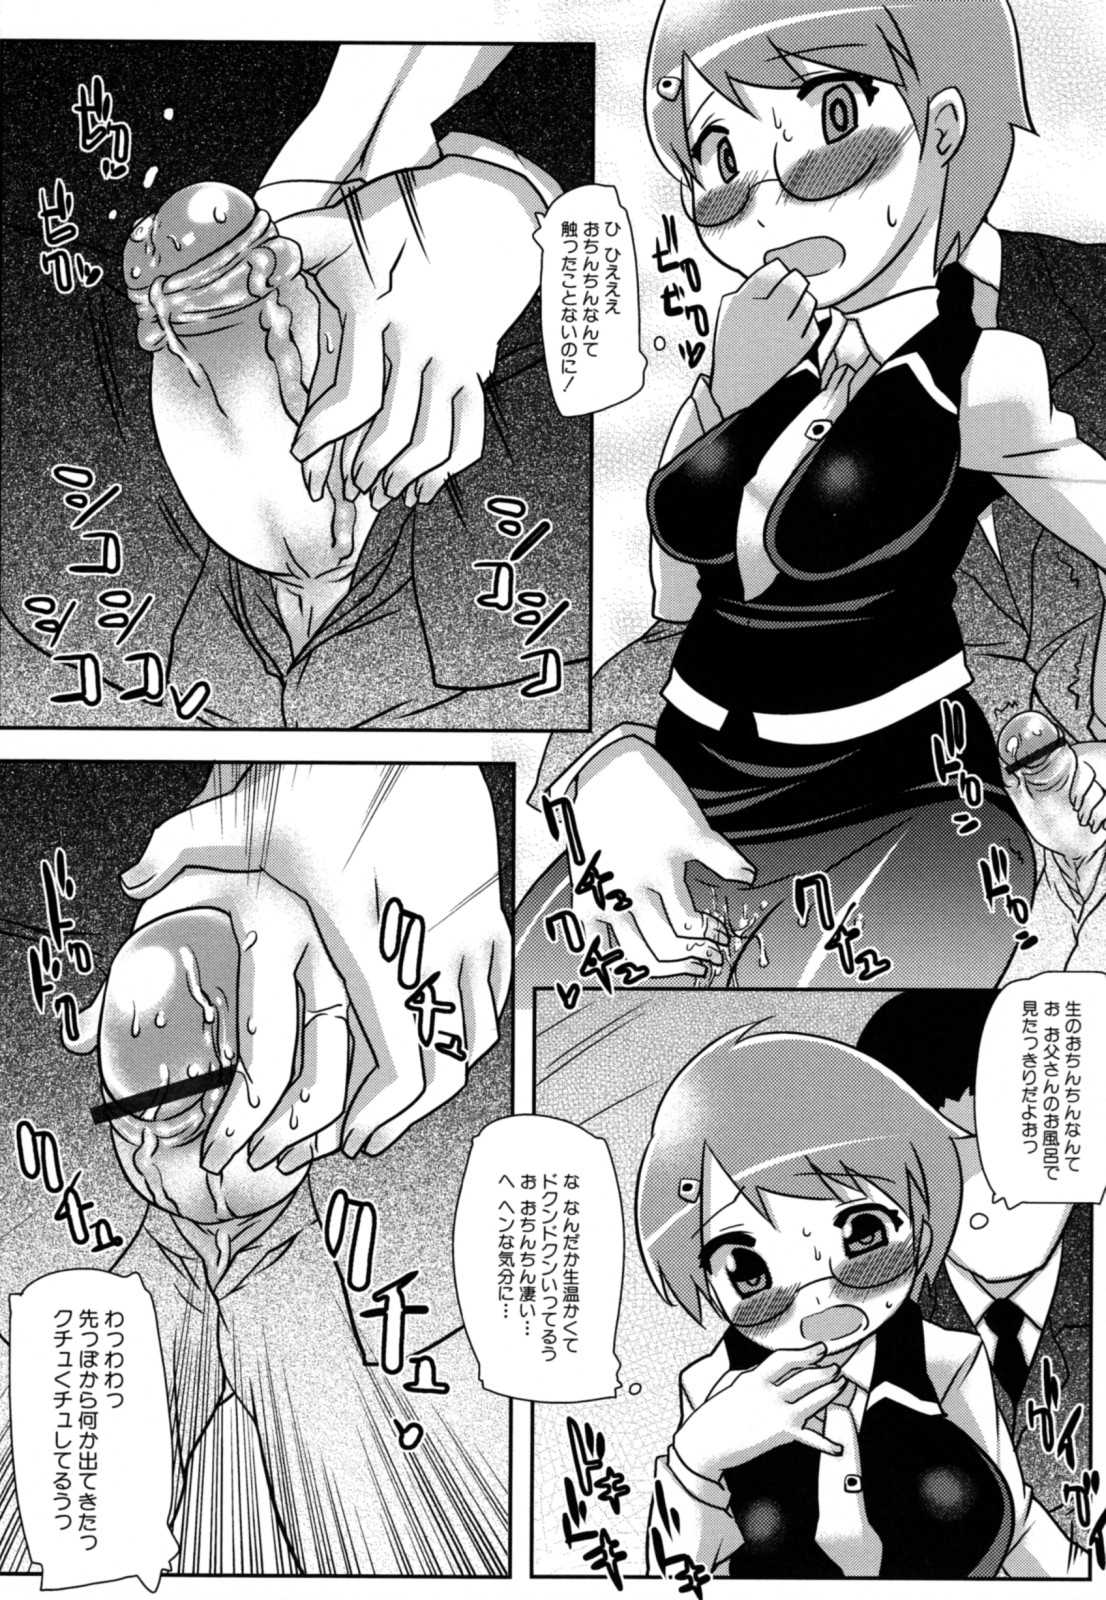 (Adult Manga) [Hirokazu Haba] Chiu Pet [2008-03-05] 